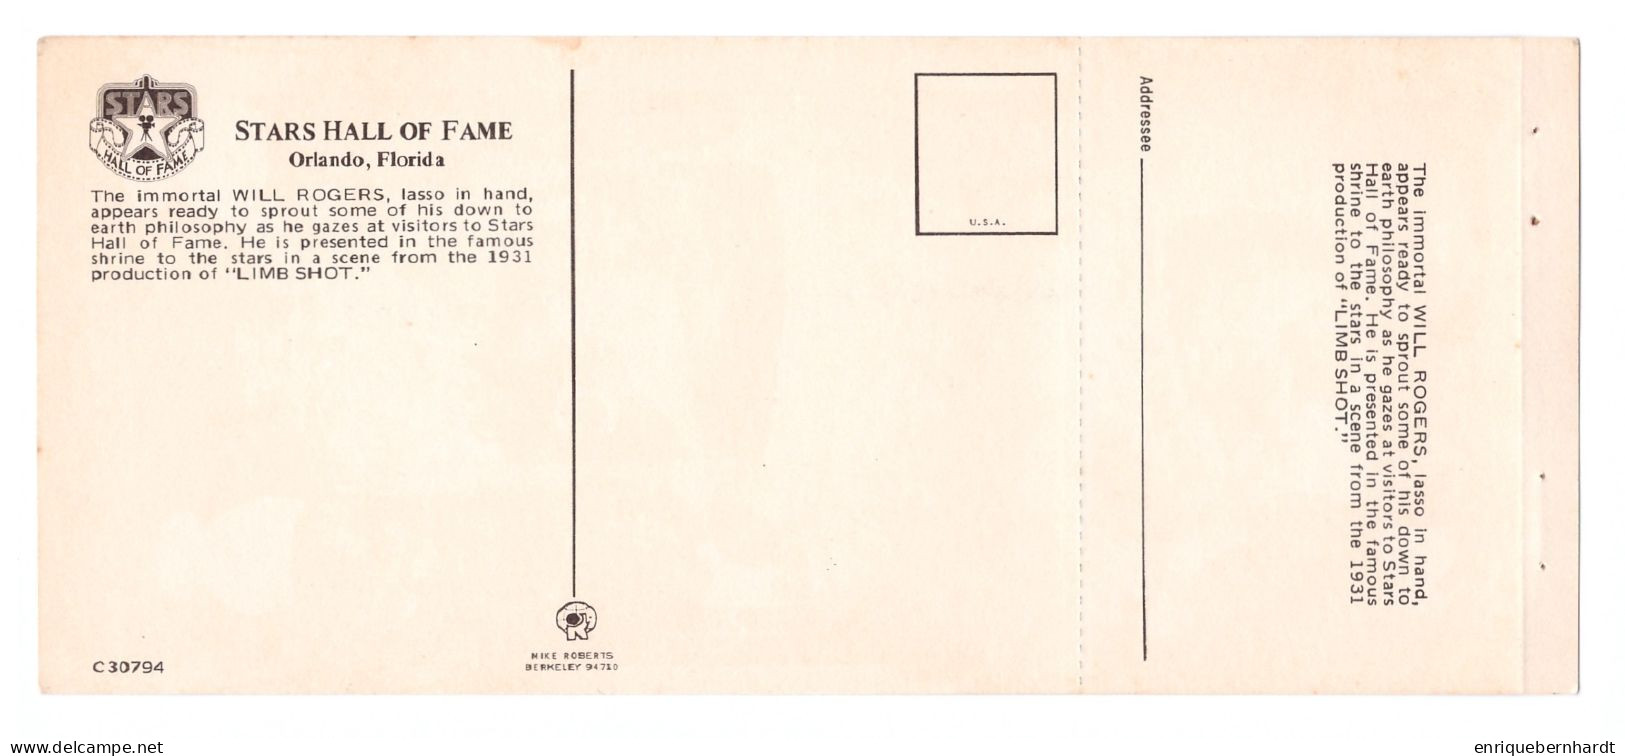 UNITED STATES // FLORIDA // ORLANDO // STARS HALL OF FAME // WILL ROGERS - LIMB SHOT (1931) - Museum